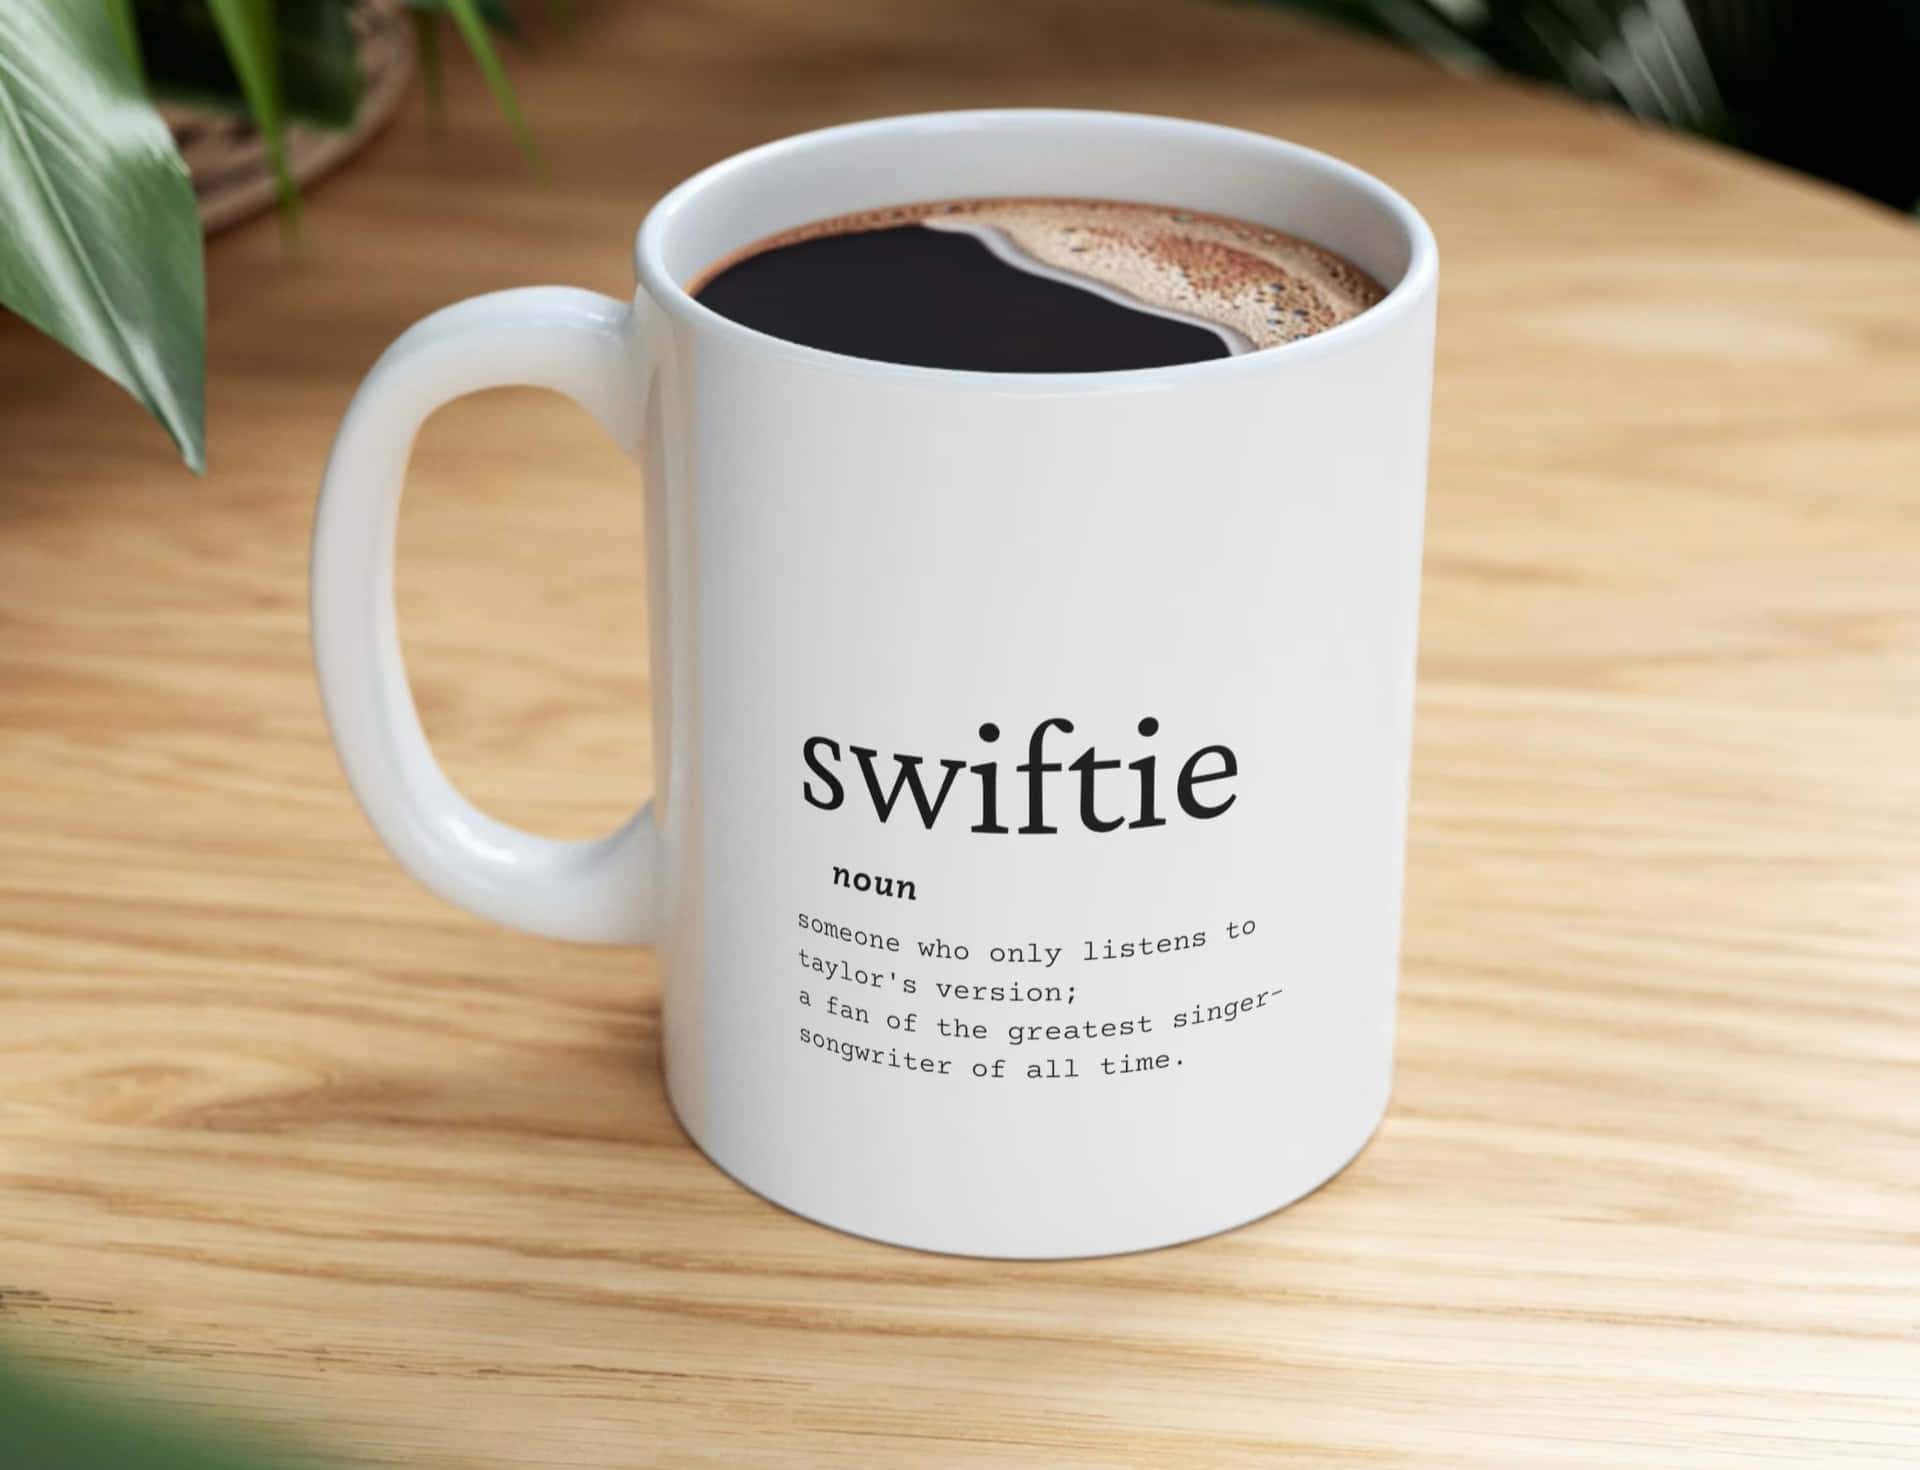 Swiftie Definition Mug Wallpaper